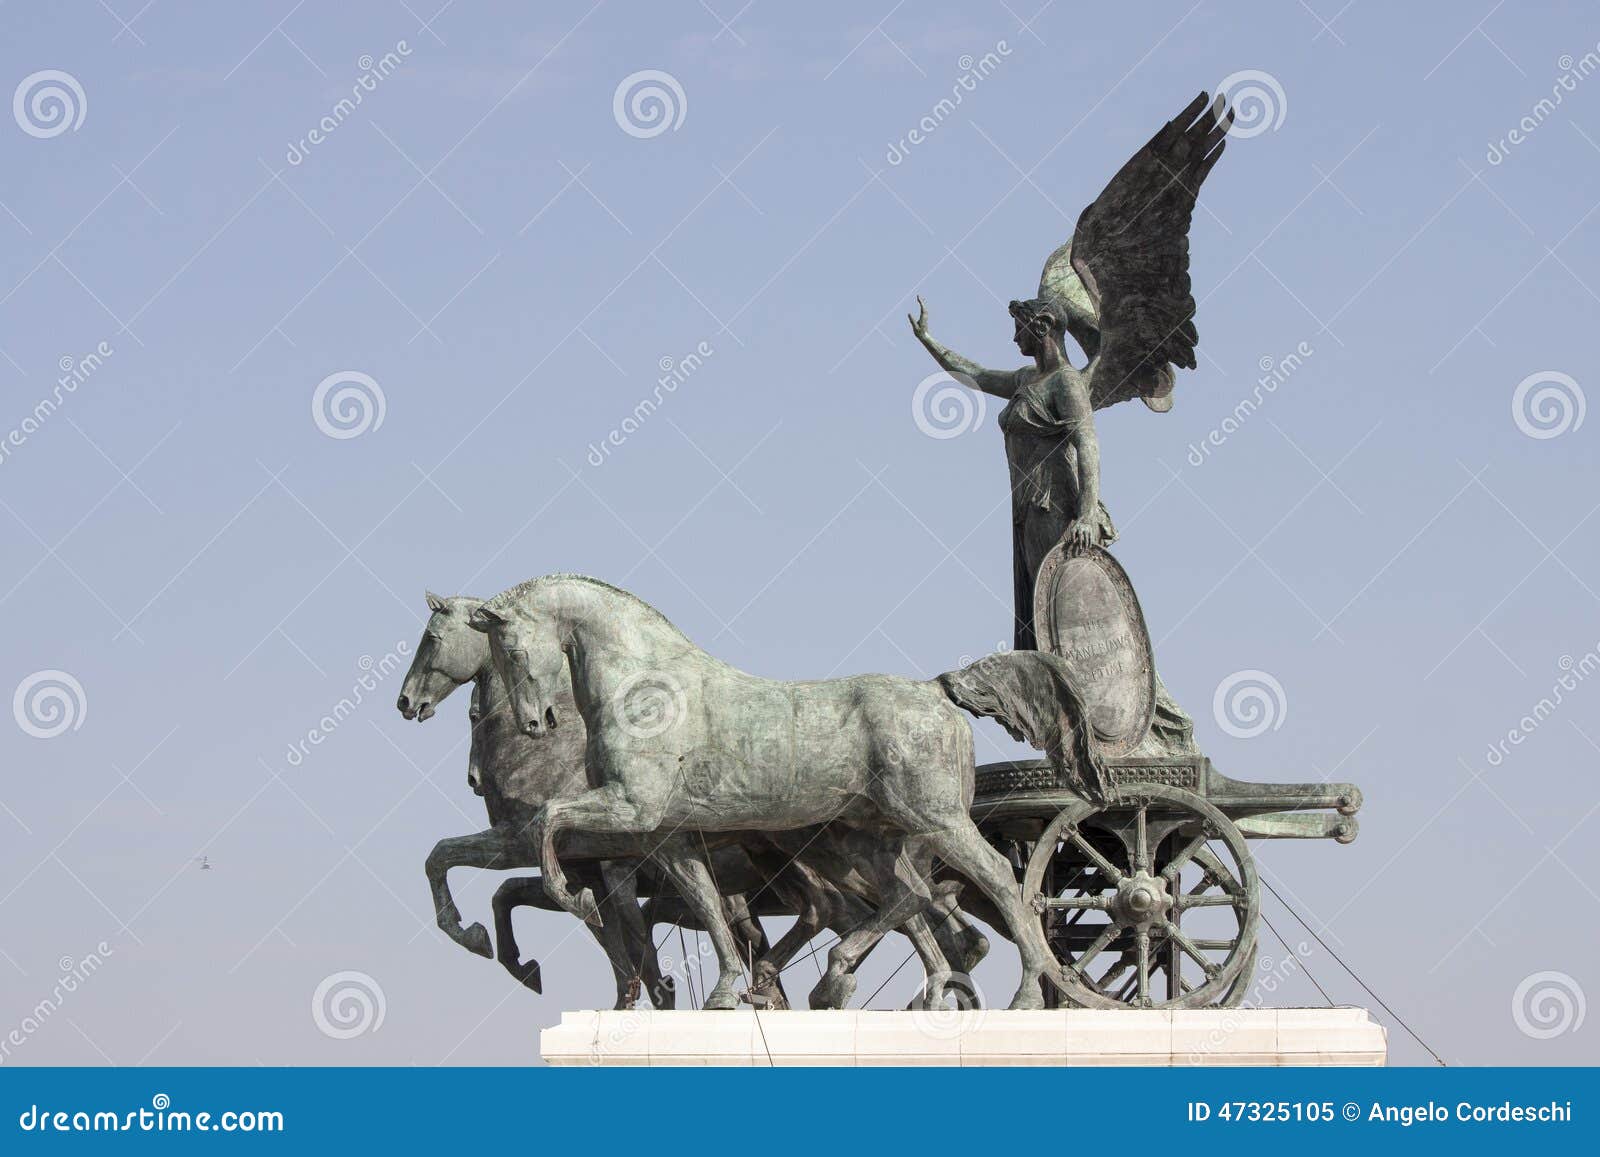 quadriga roman chariot, drawn by four horses abreast